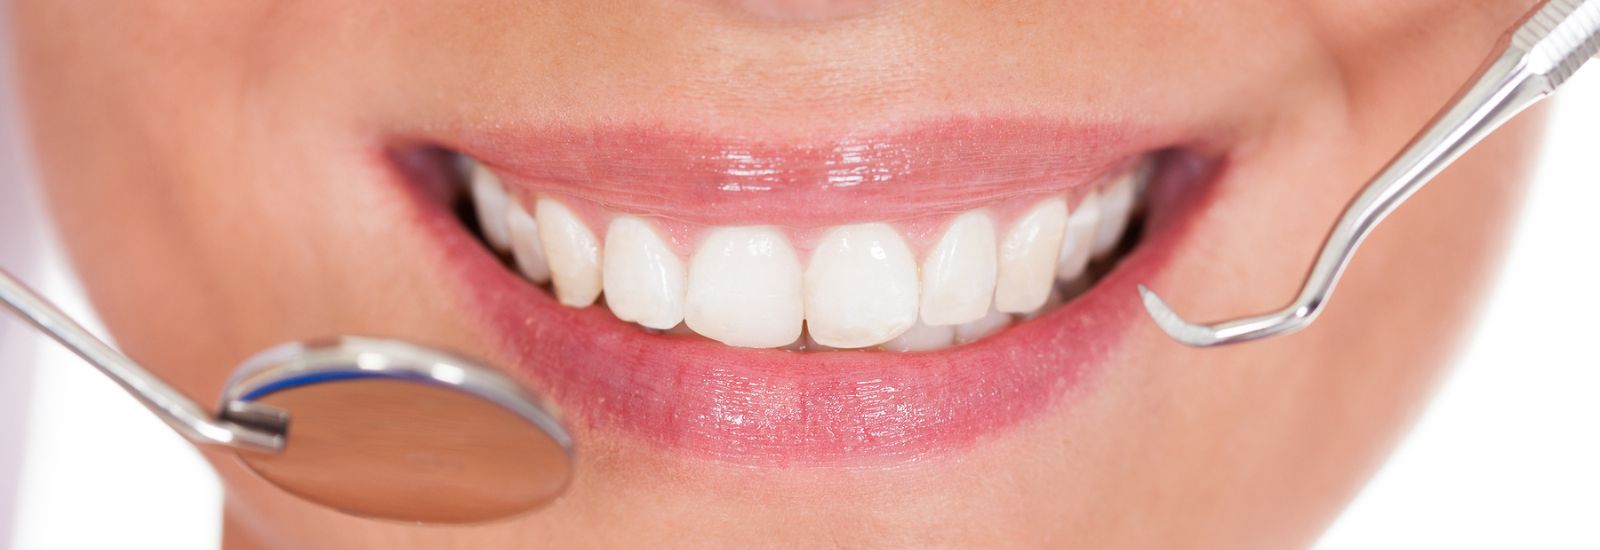 Woman smiling having white teeth